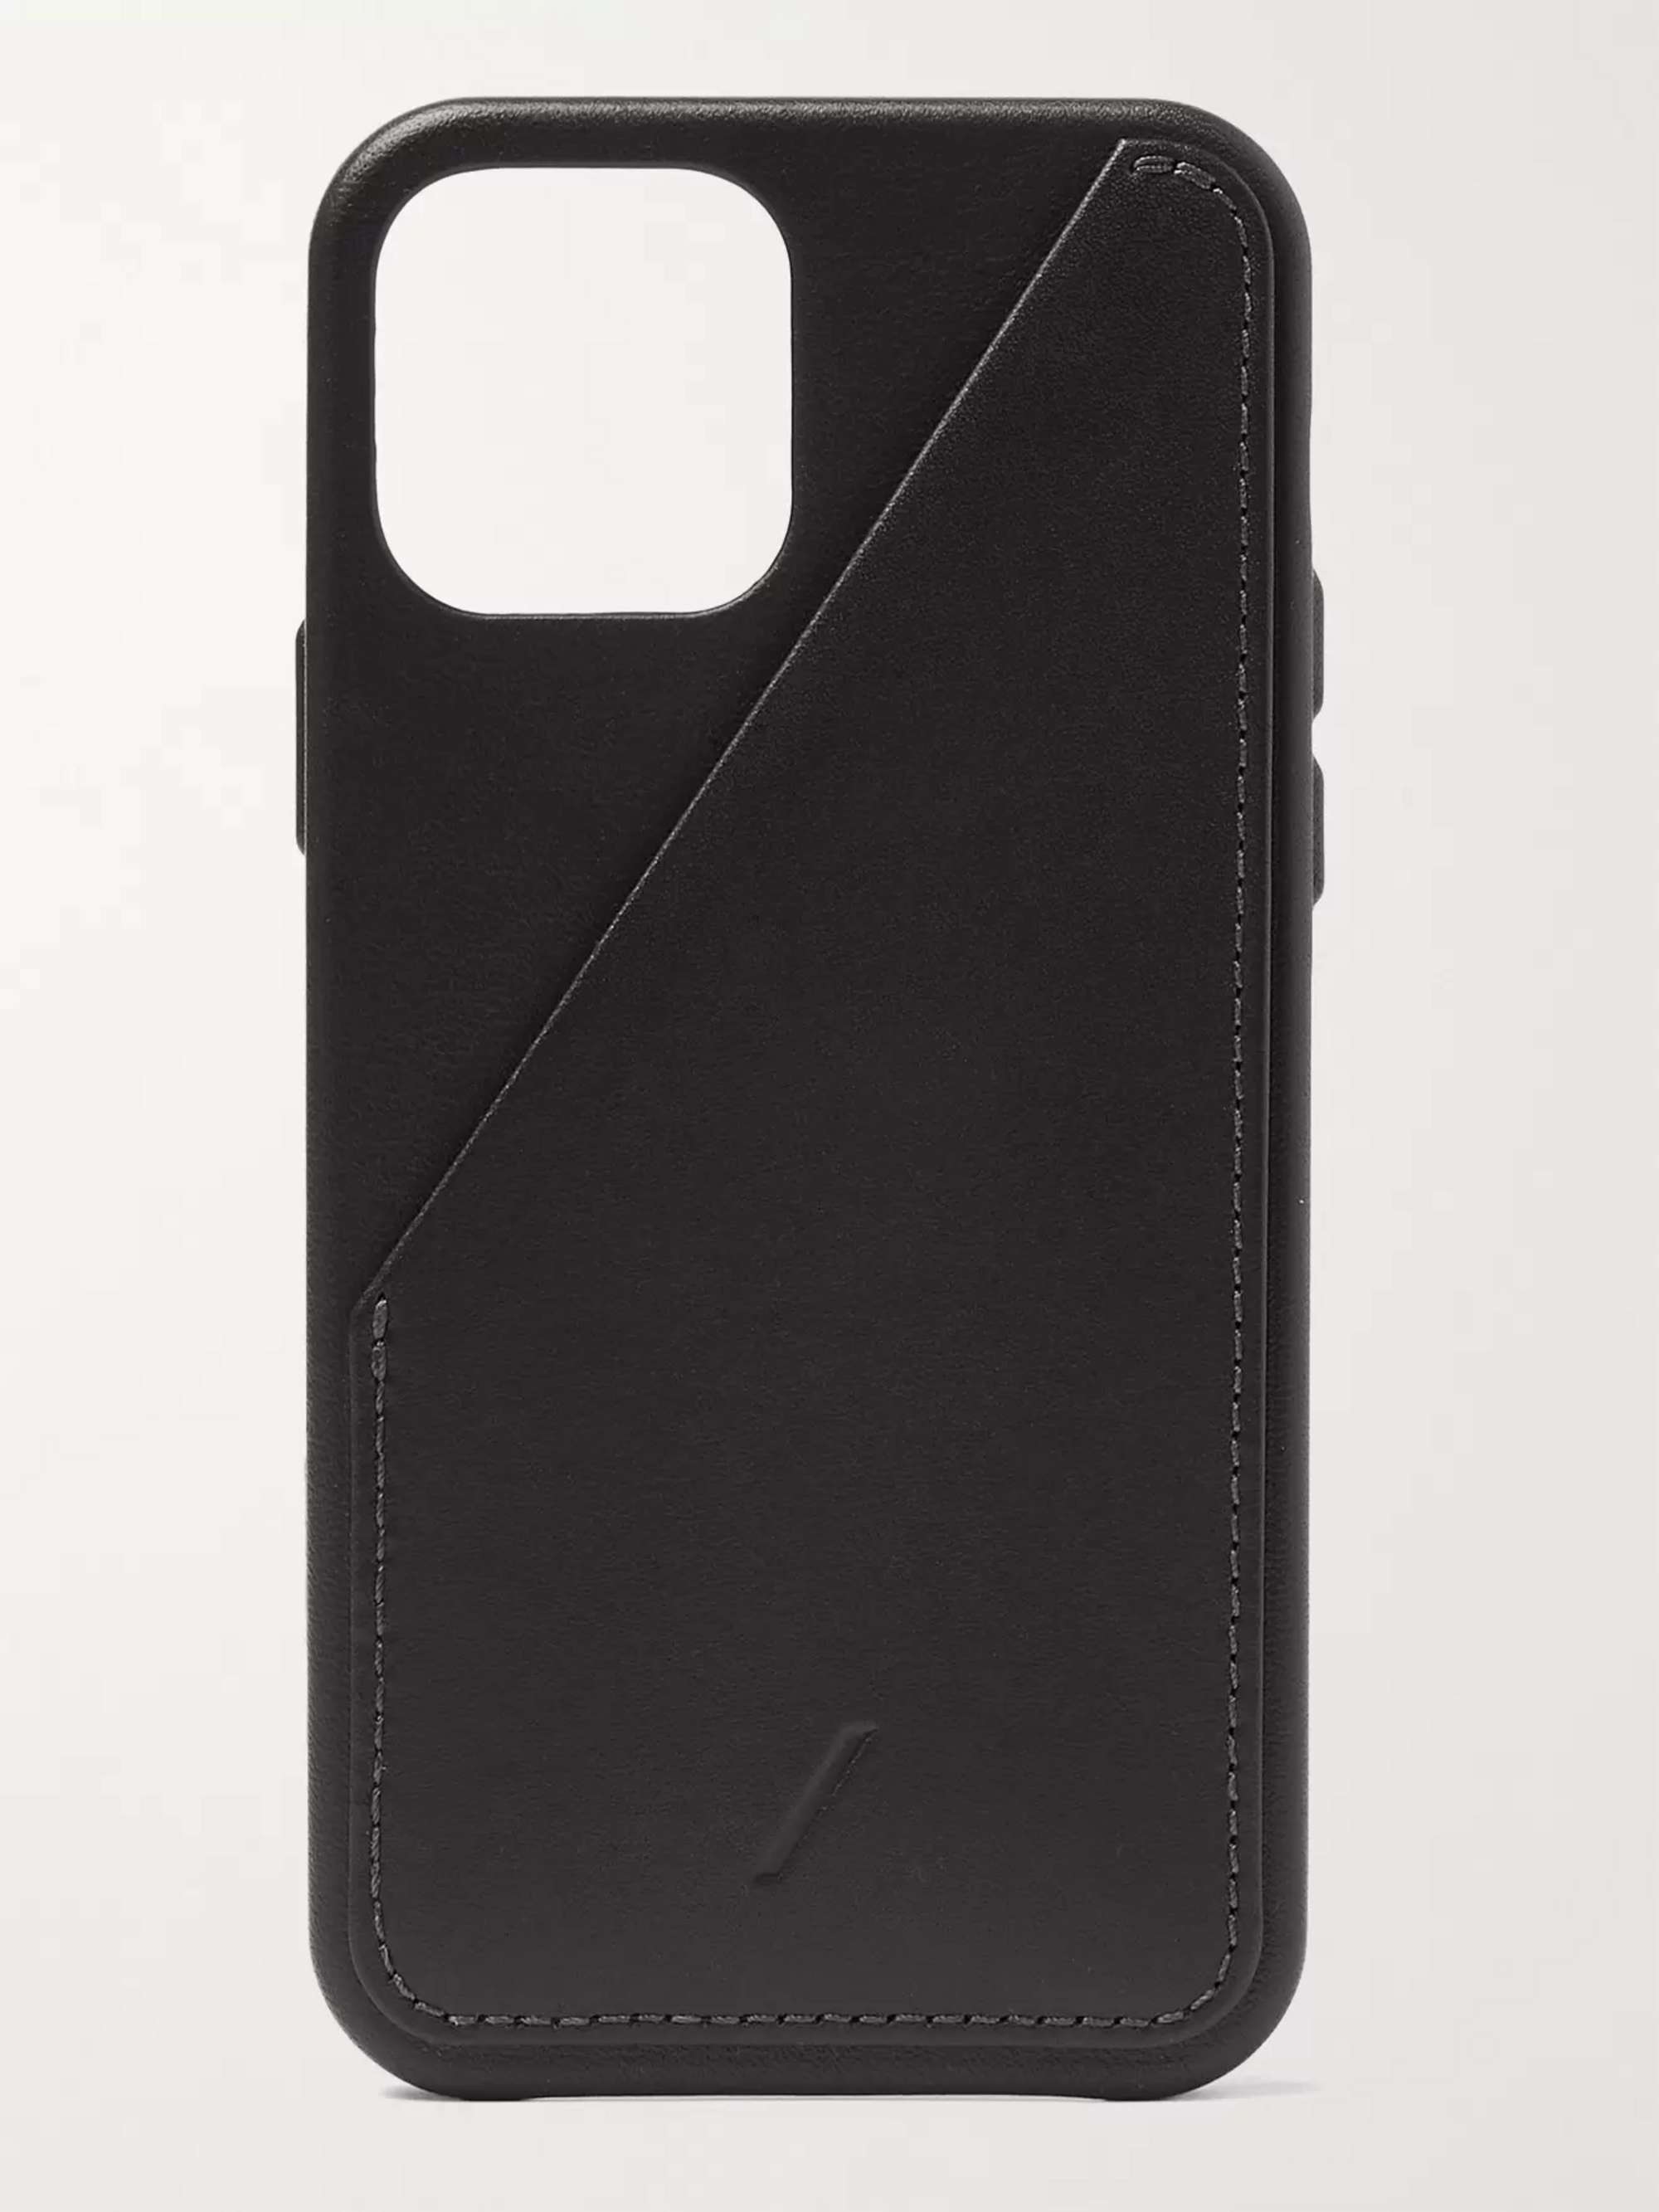 NATIVE UNION Clic Card Leather iPhone 12 Case